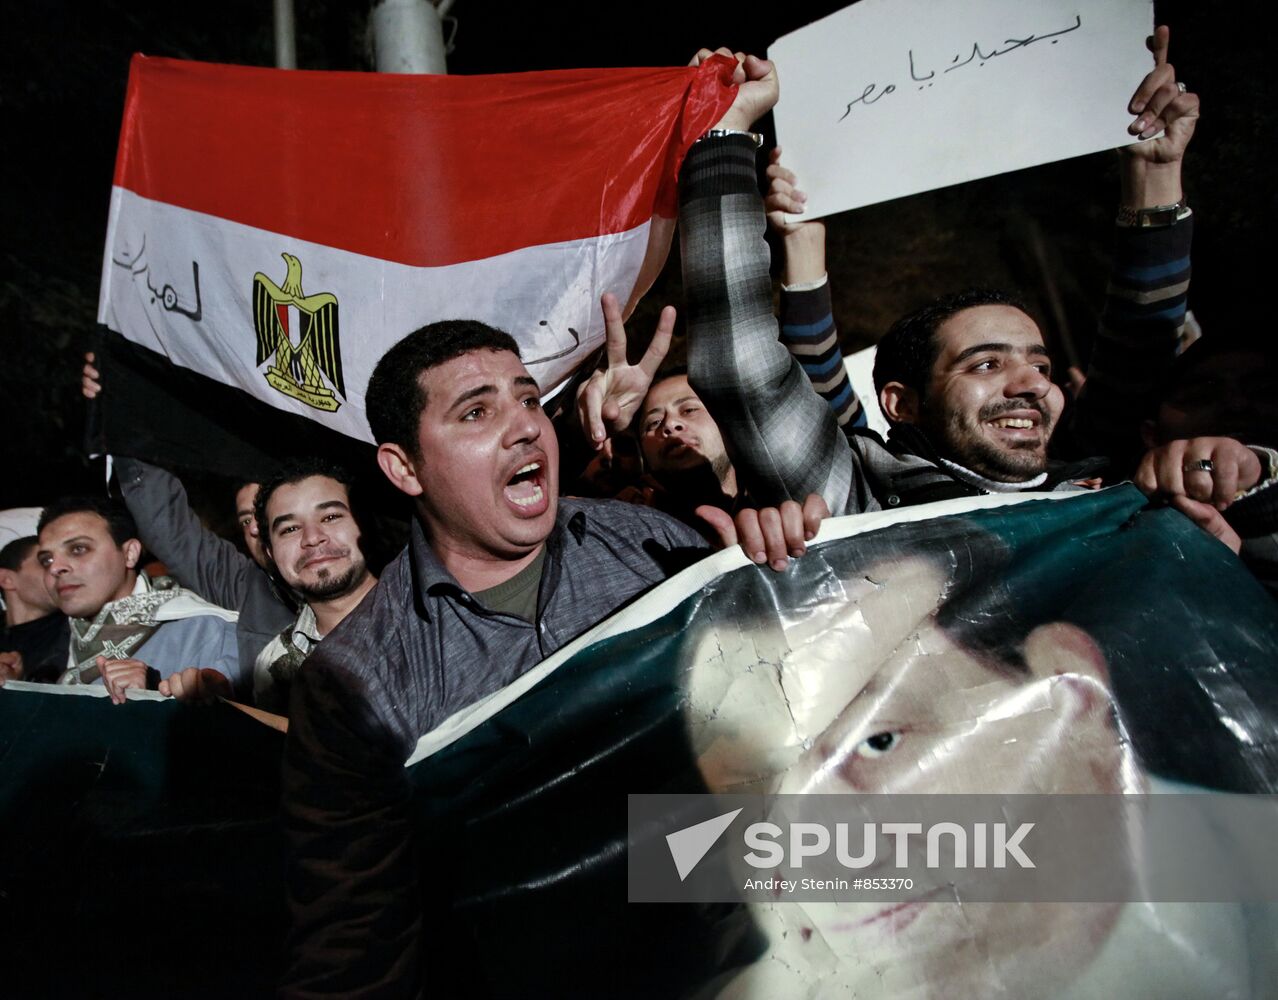 Rally in support of president Hosni Mubarak